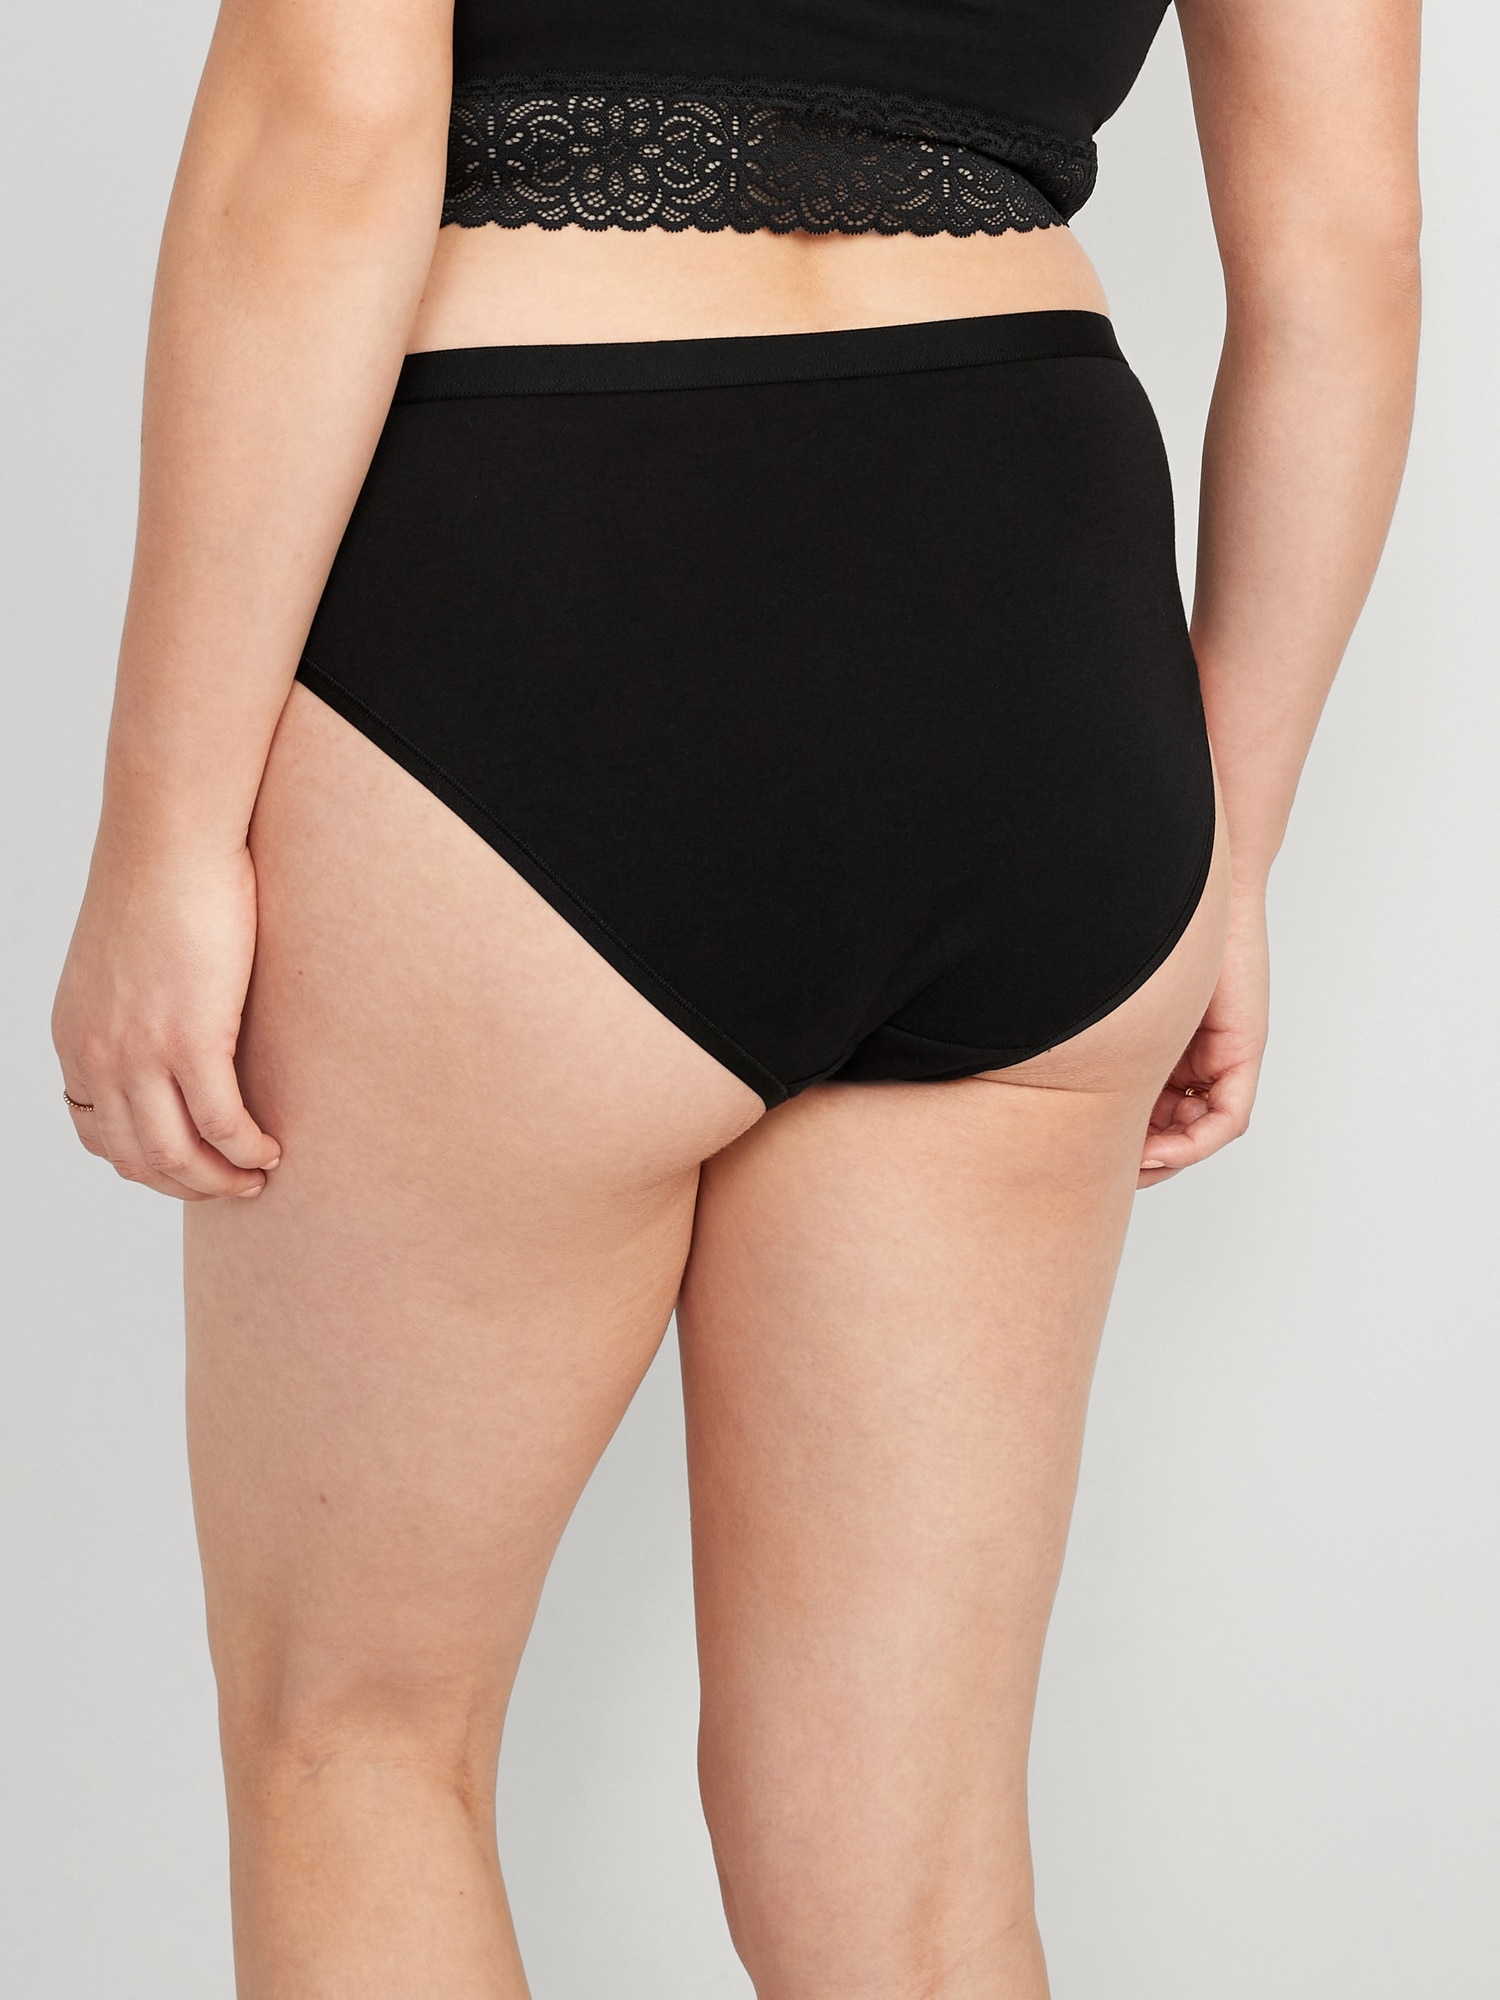 Kinyanco 5-Pack Women's High Waist Tummy Control Panties Cotton Underwear  No Muffin Top